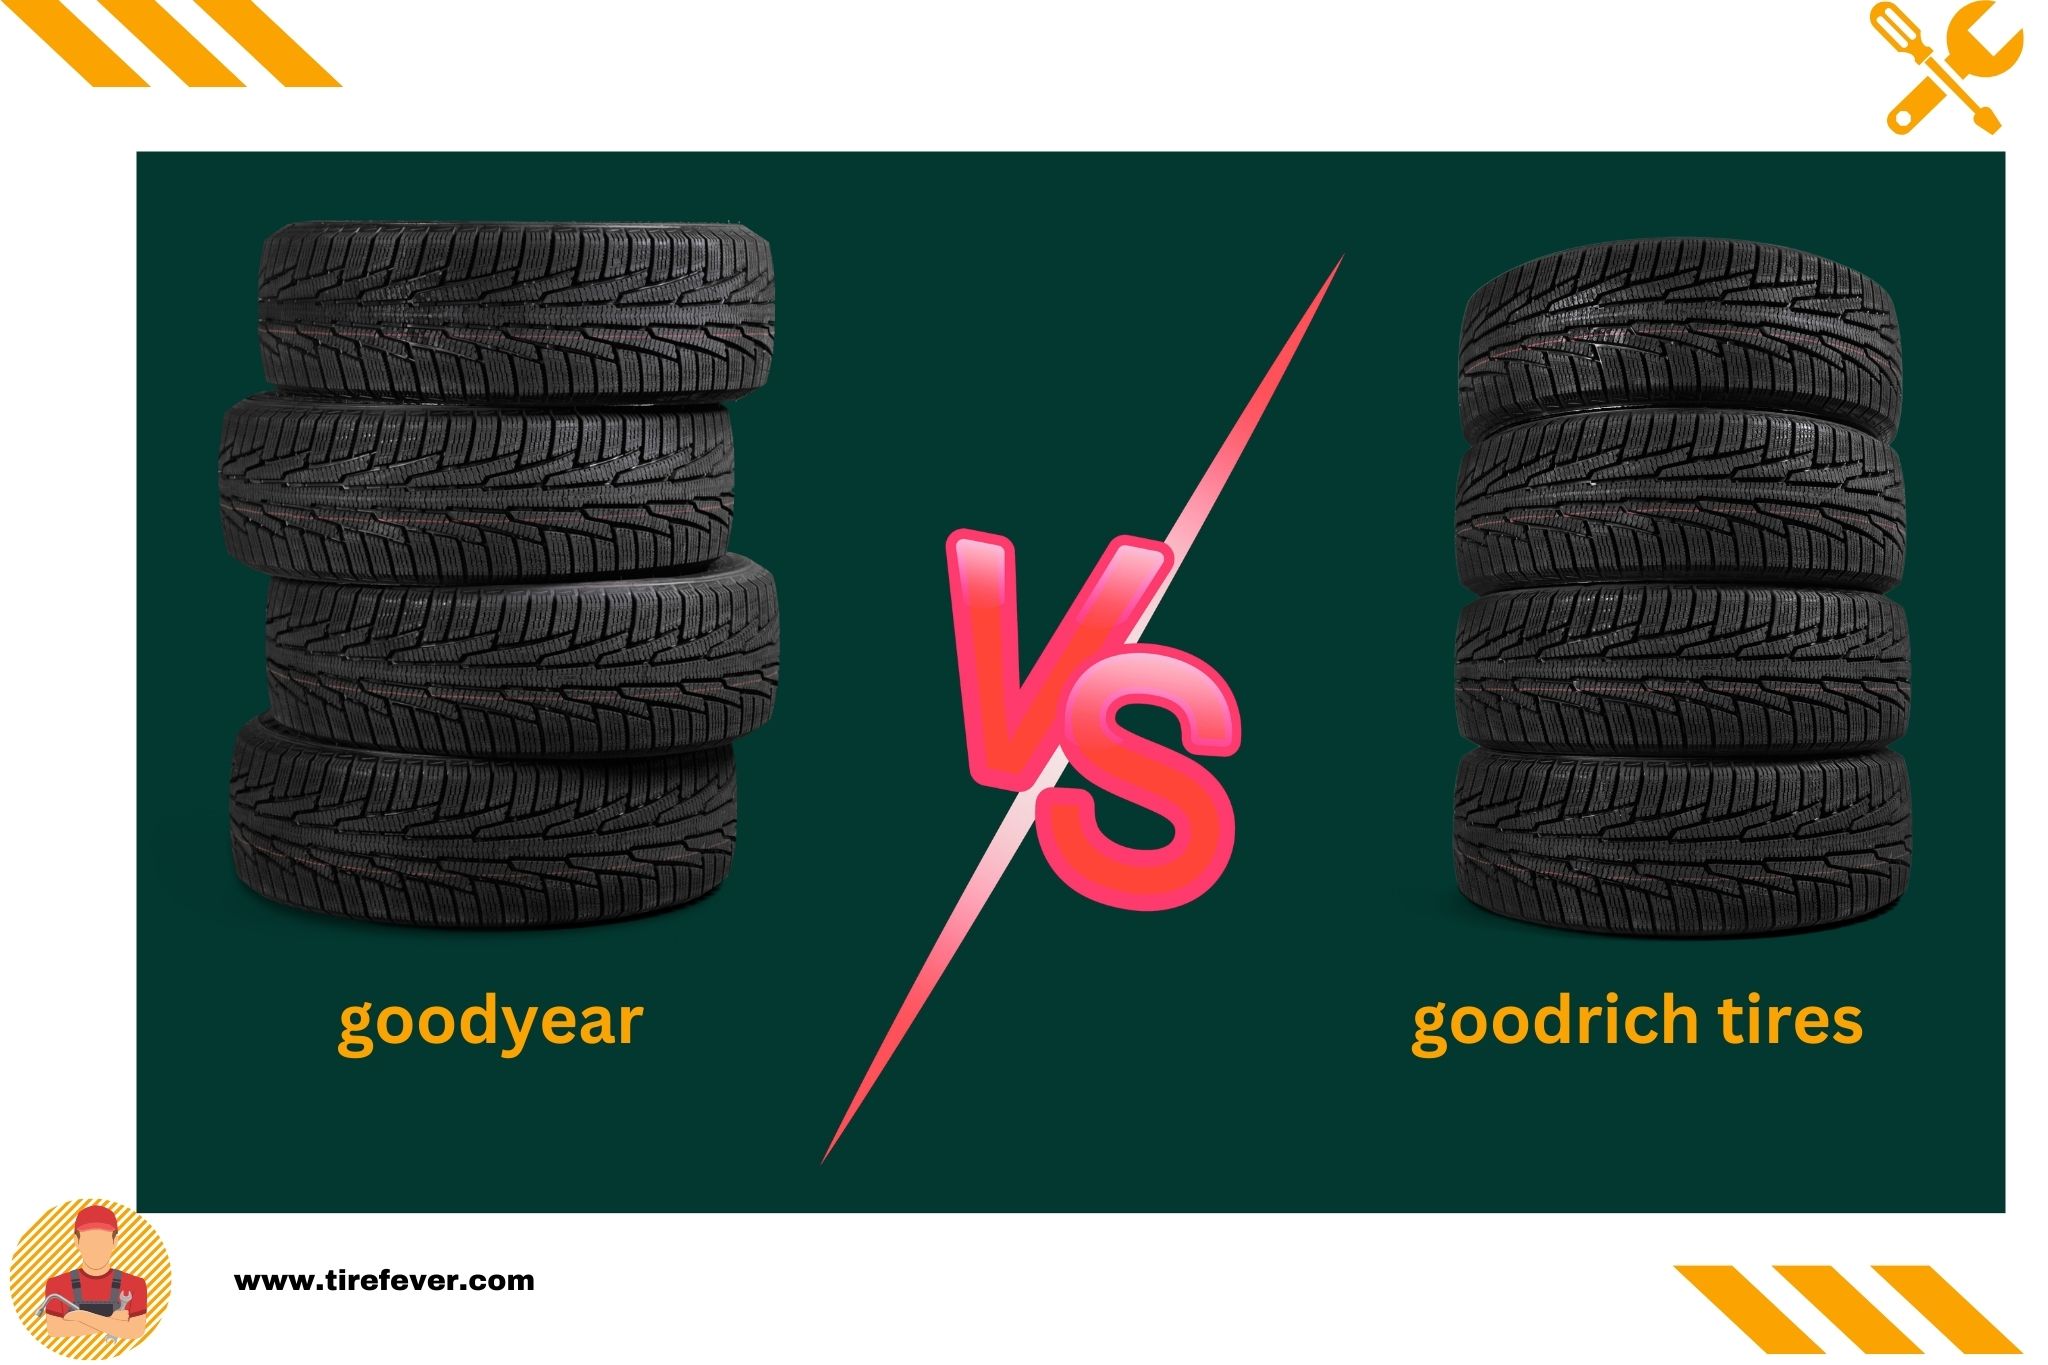 goodyear vs goodrich tires